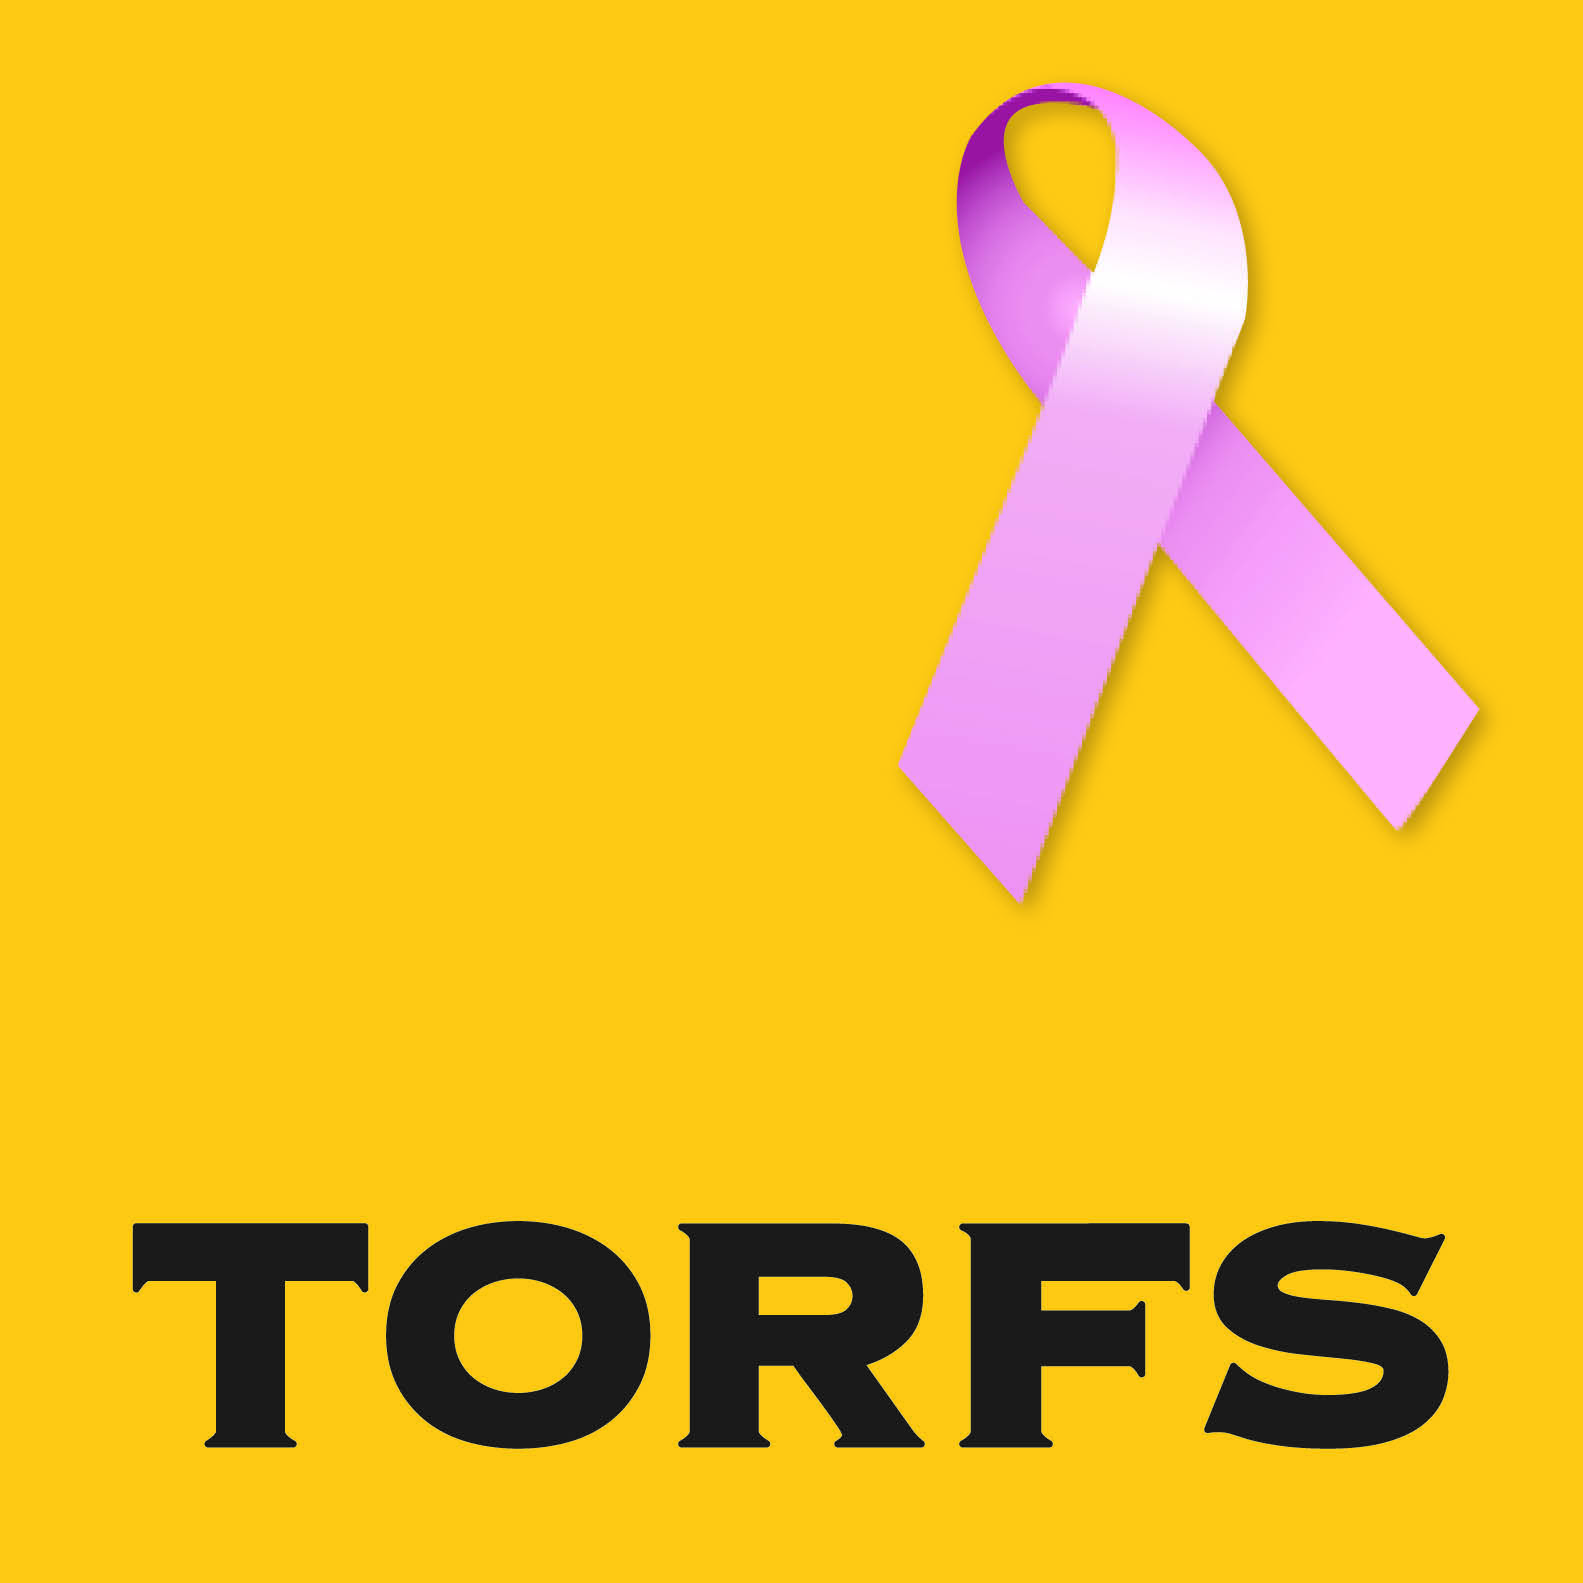 Torfs logo